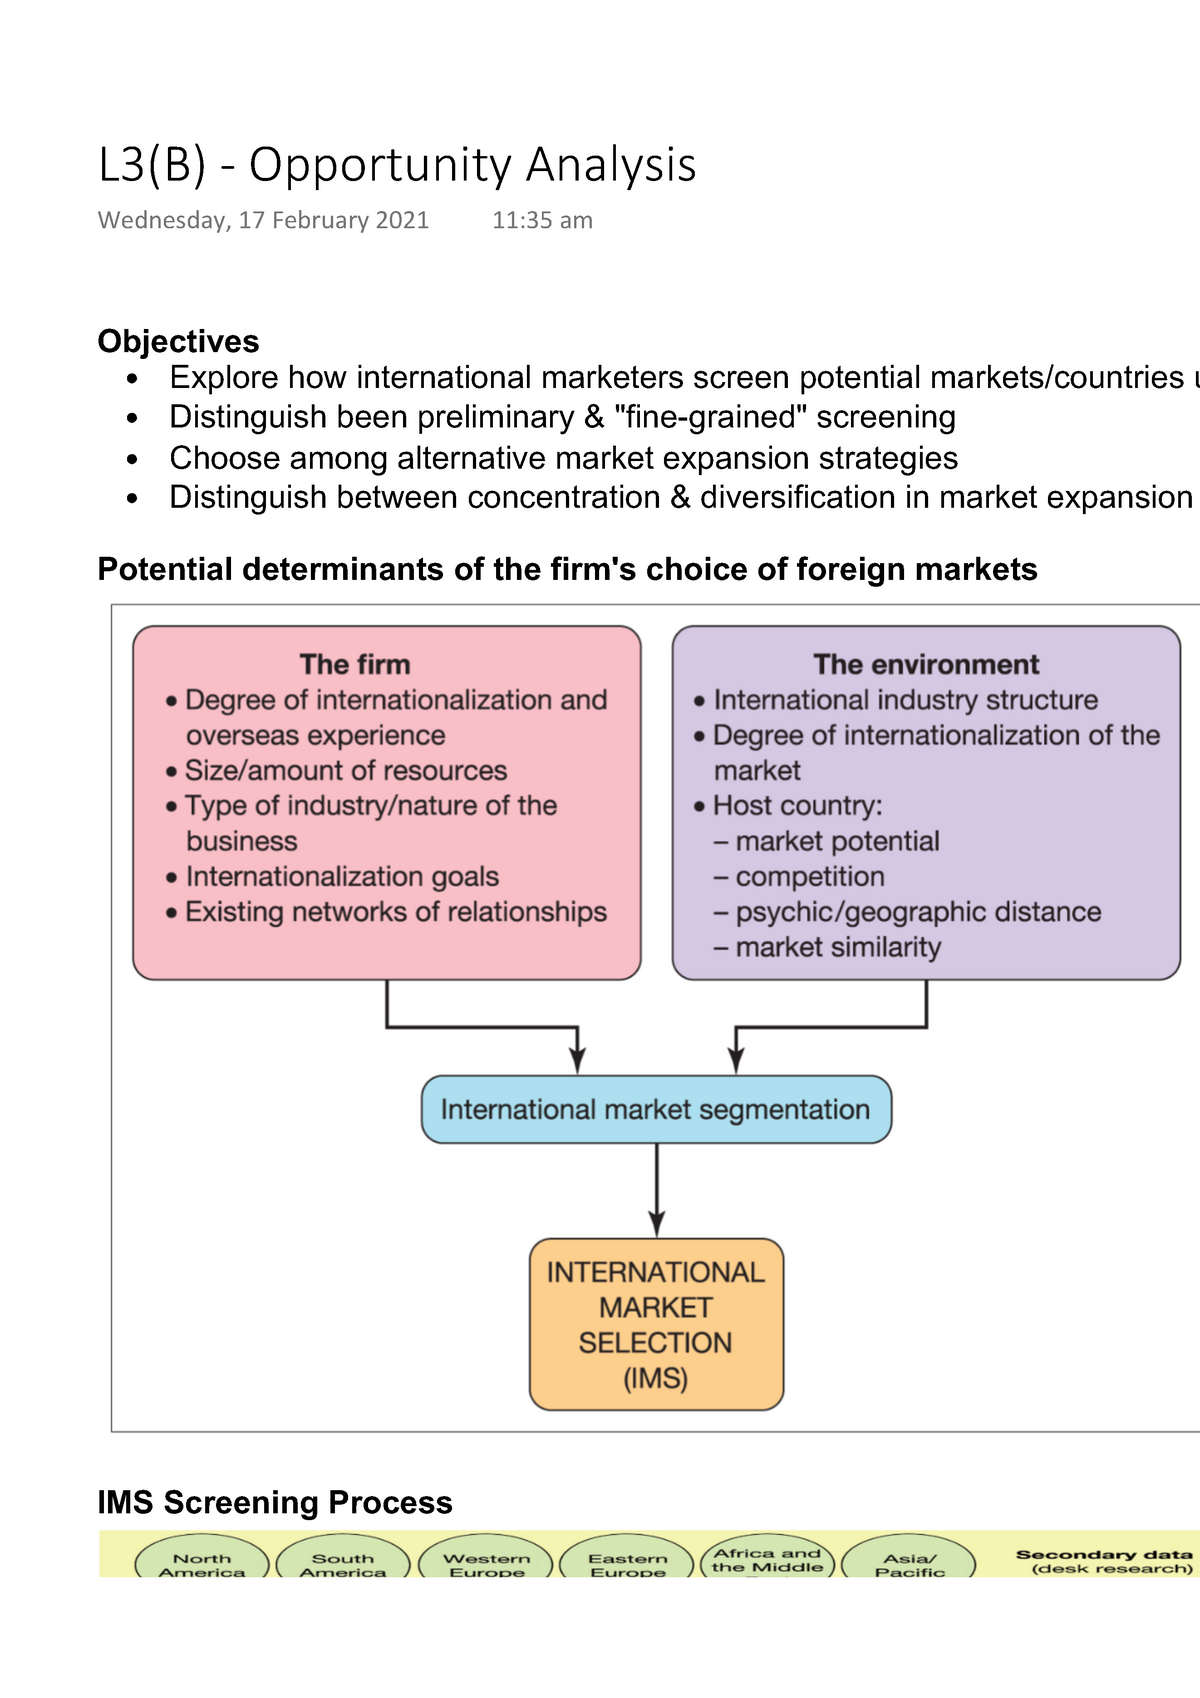 international market screening process